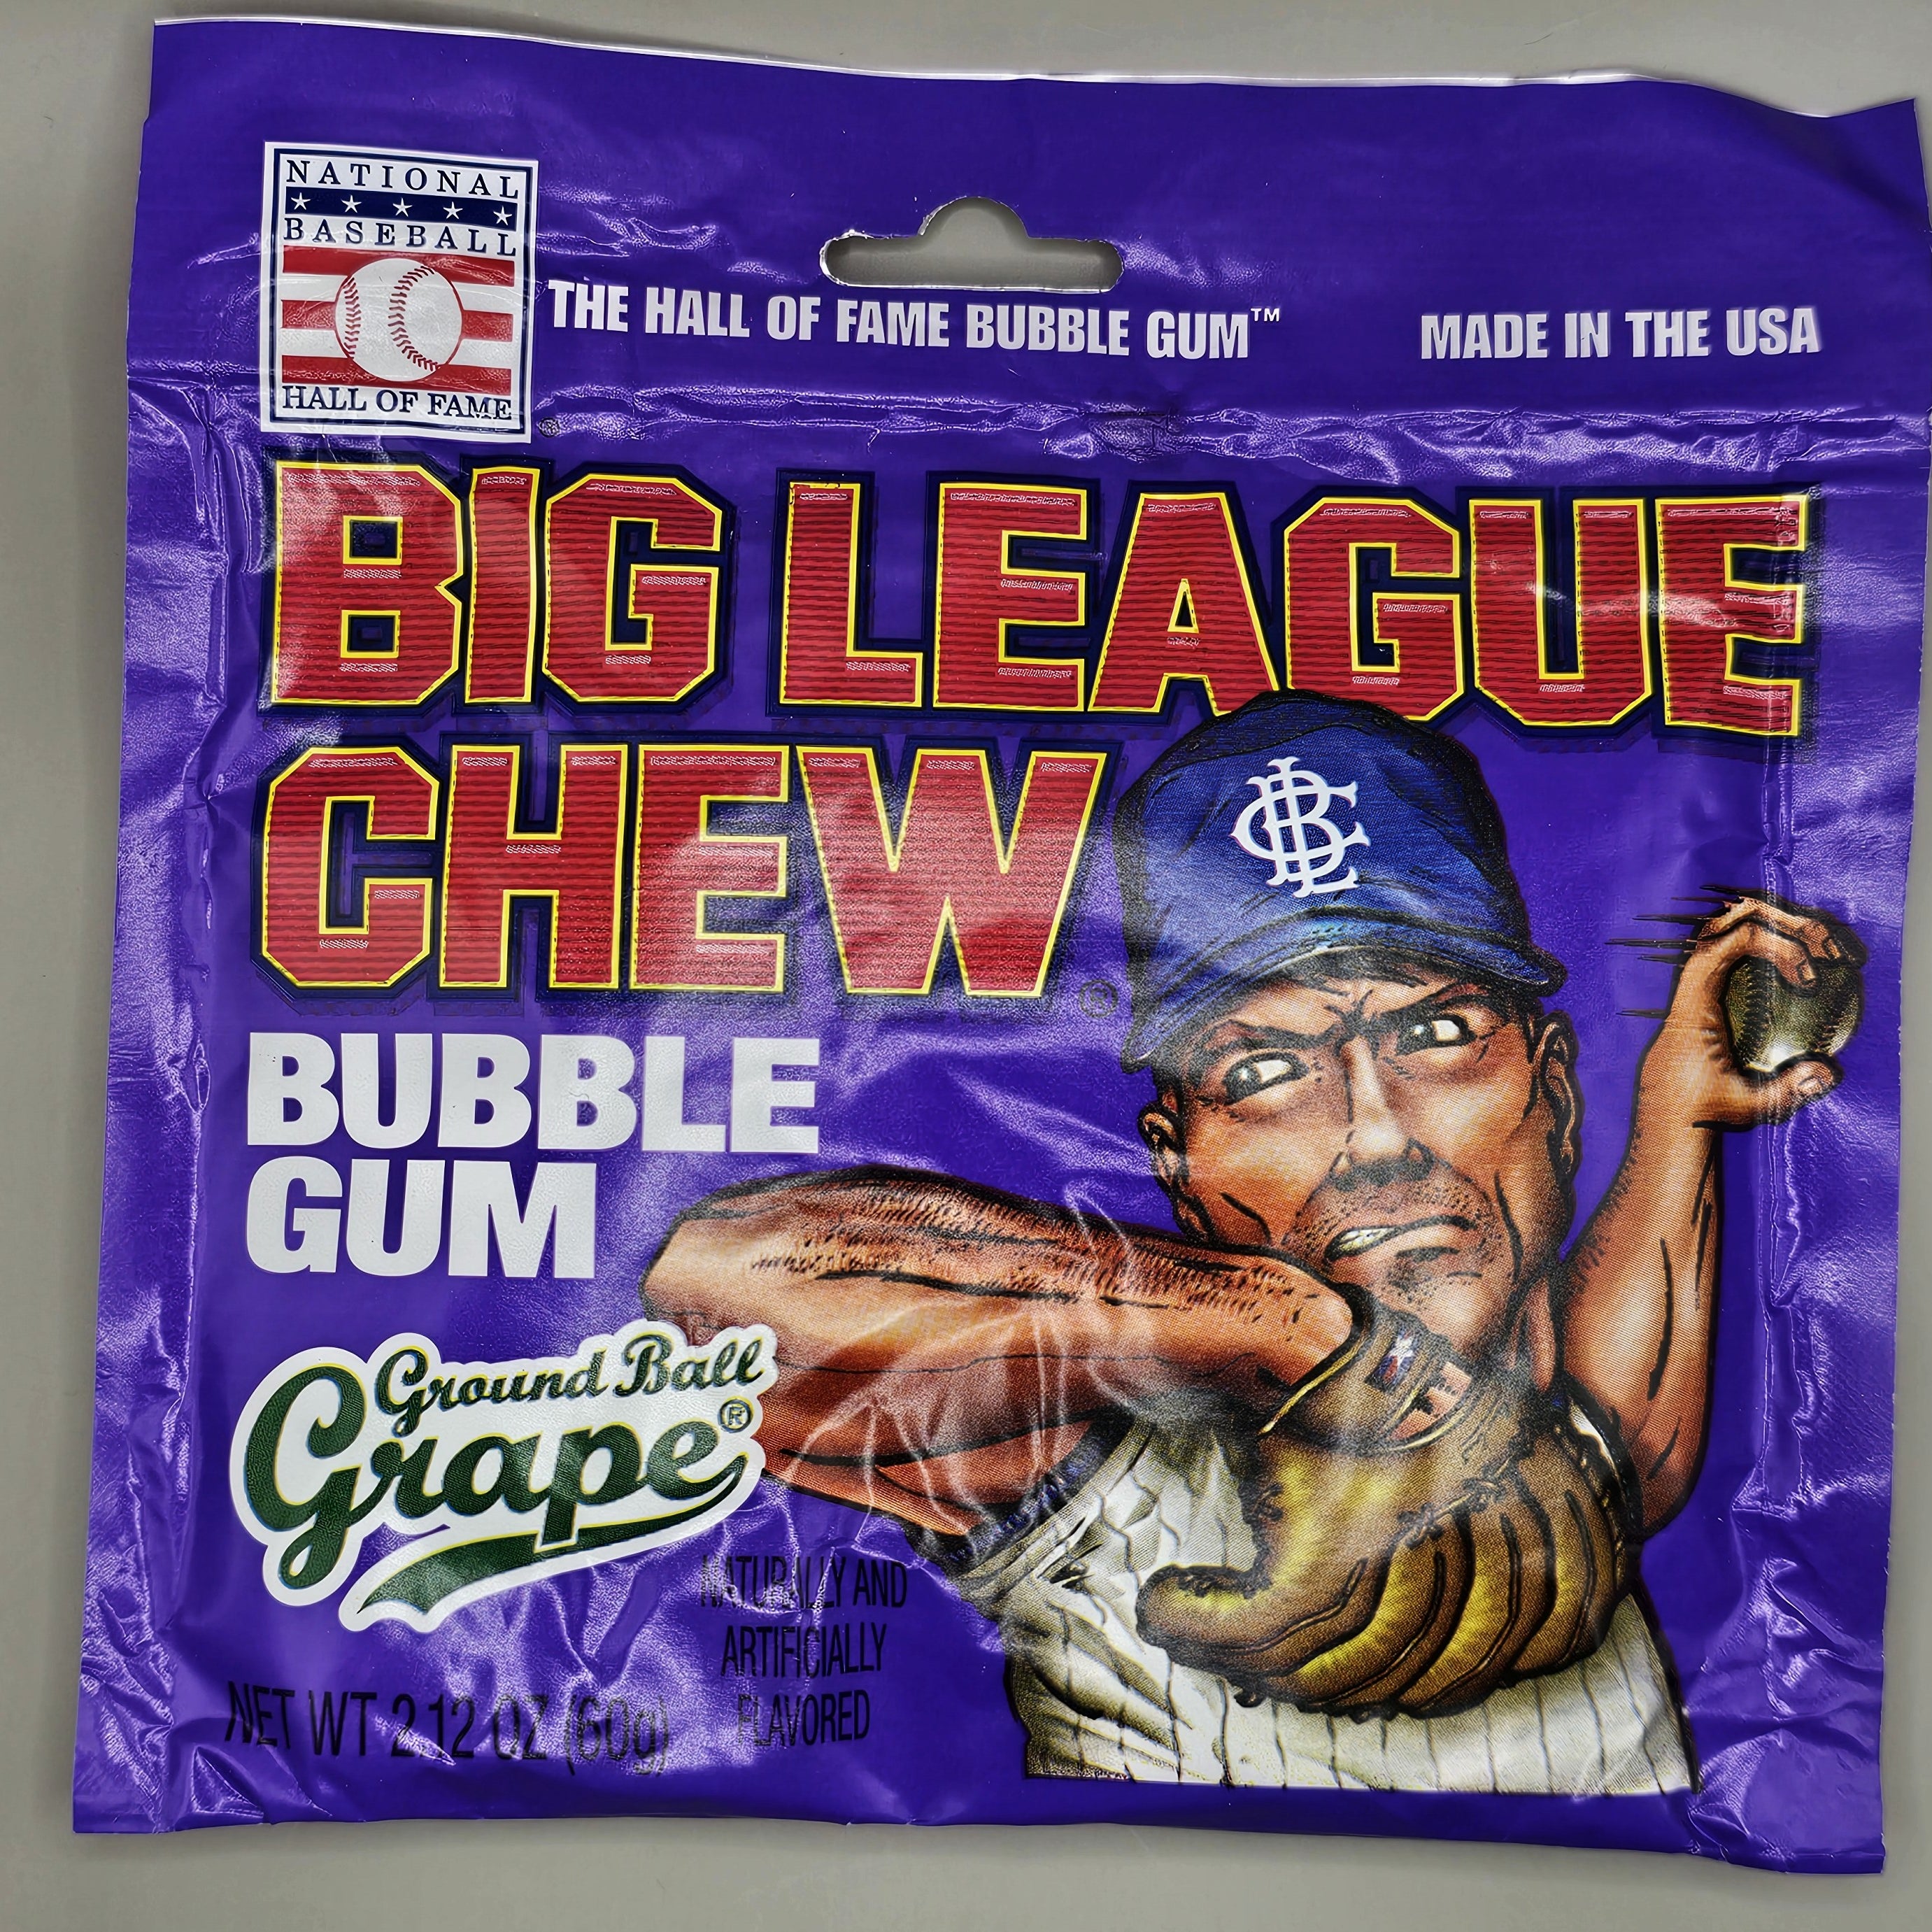 Ground ball grape big league chew.